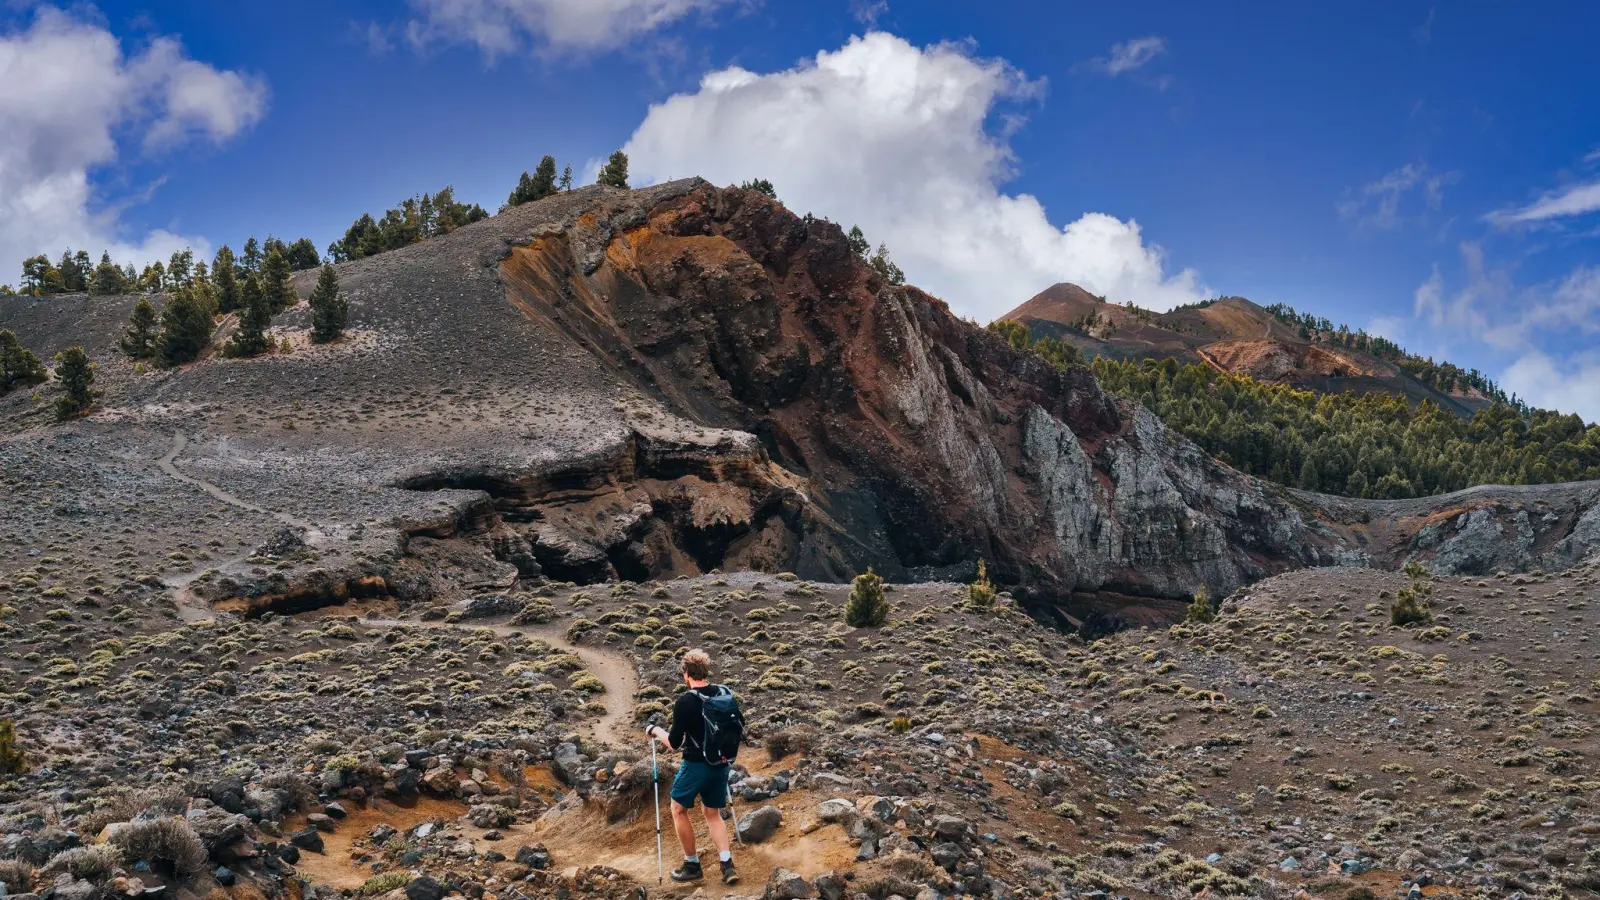 Die Kanareninsel La Palma: Nach dem Vulkanausbruch im Herbst 2021 ist nun der Wanderweg Ruta de los Volcanes wieder offen. (Foto: Alex Díaz/Visit La Palma/dpa-tmn)